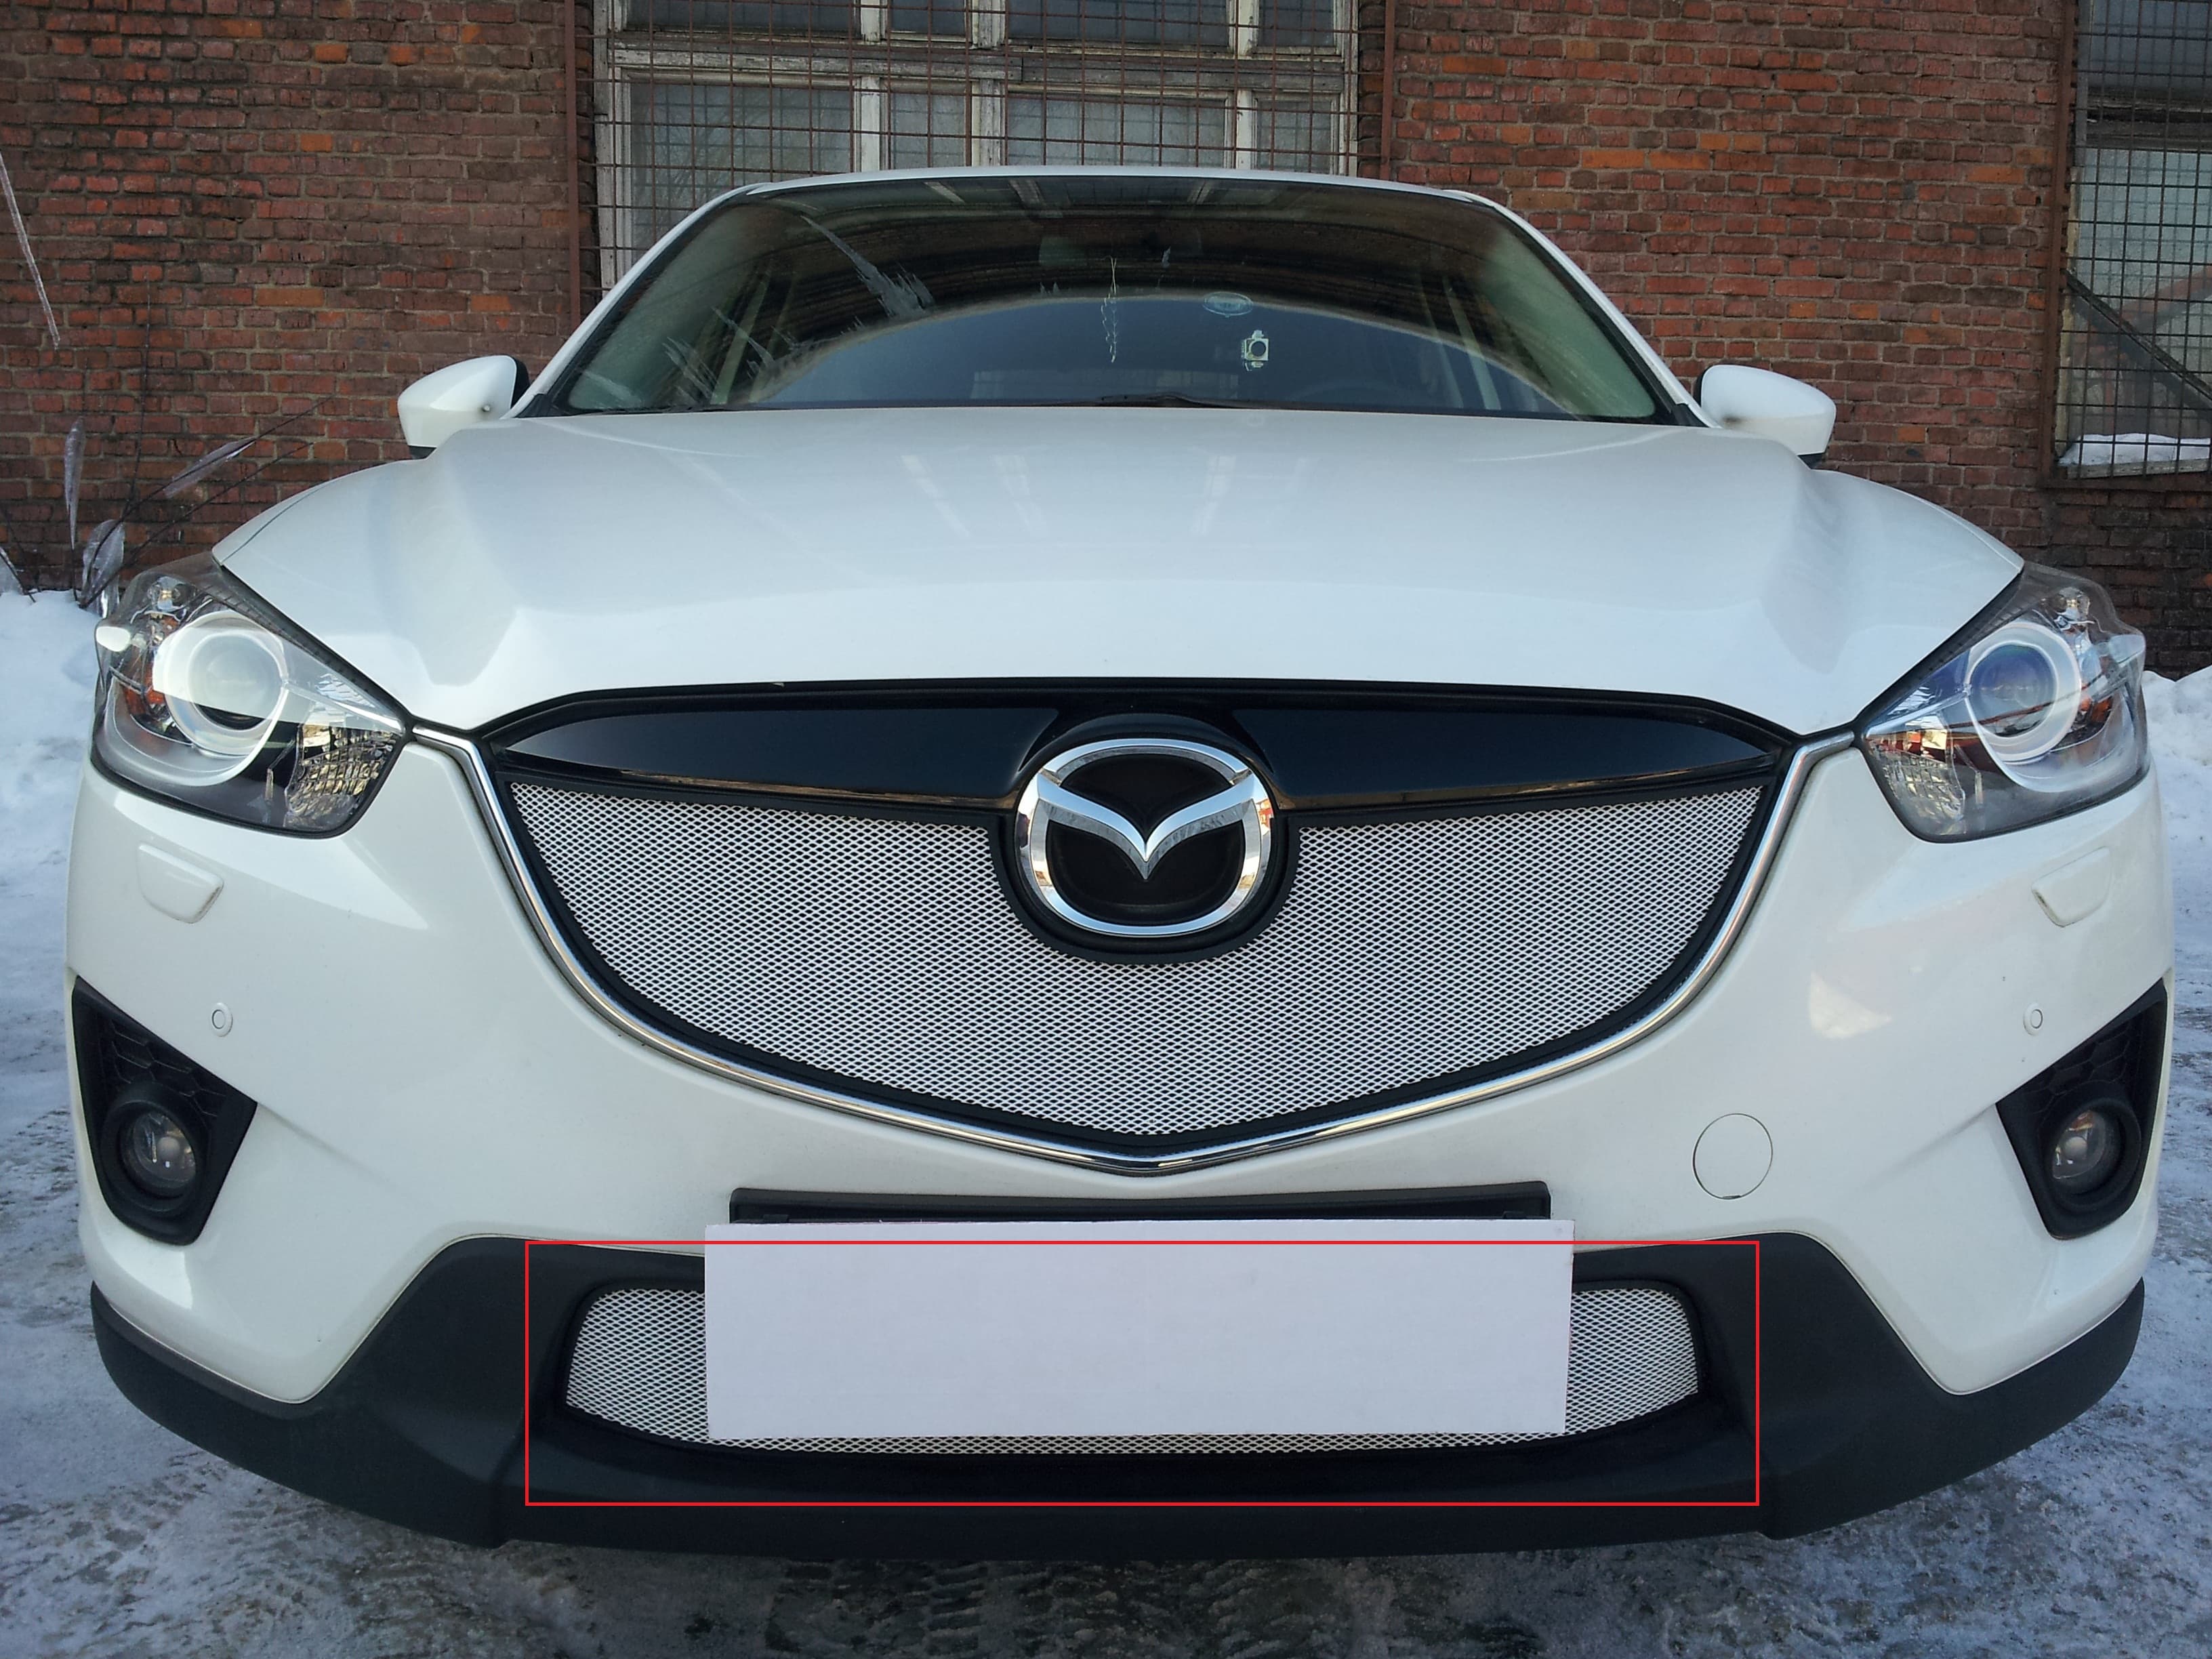 Защитная сетка радиатора ProtectGrille Premium нижняя для Mazda CX5 (2012-2014 Хром)